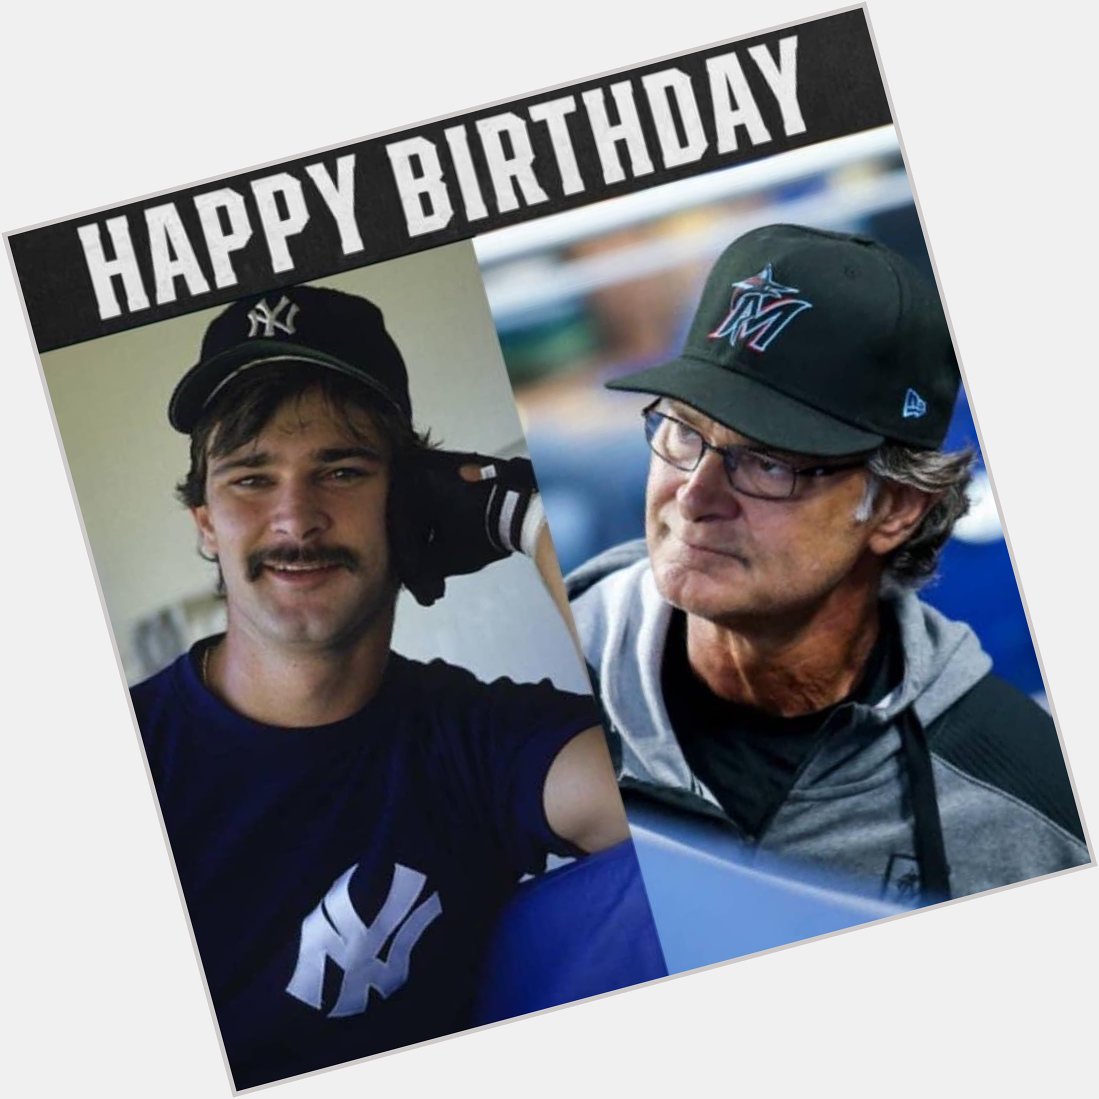 Happy Birthday Donnie Baseball Don Mattingly 